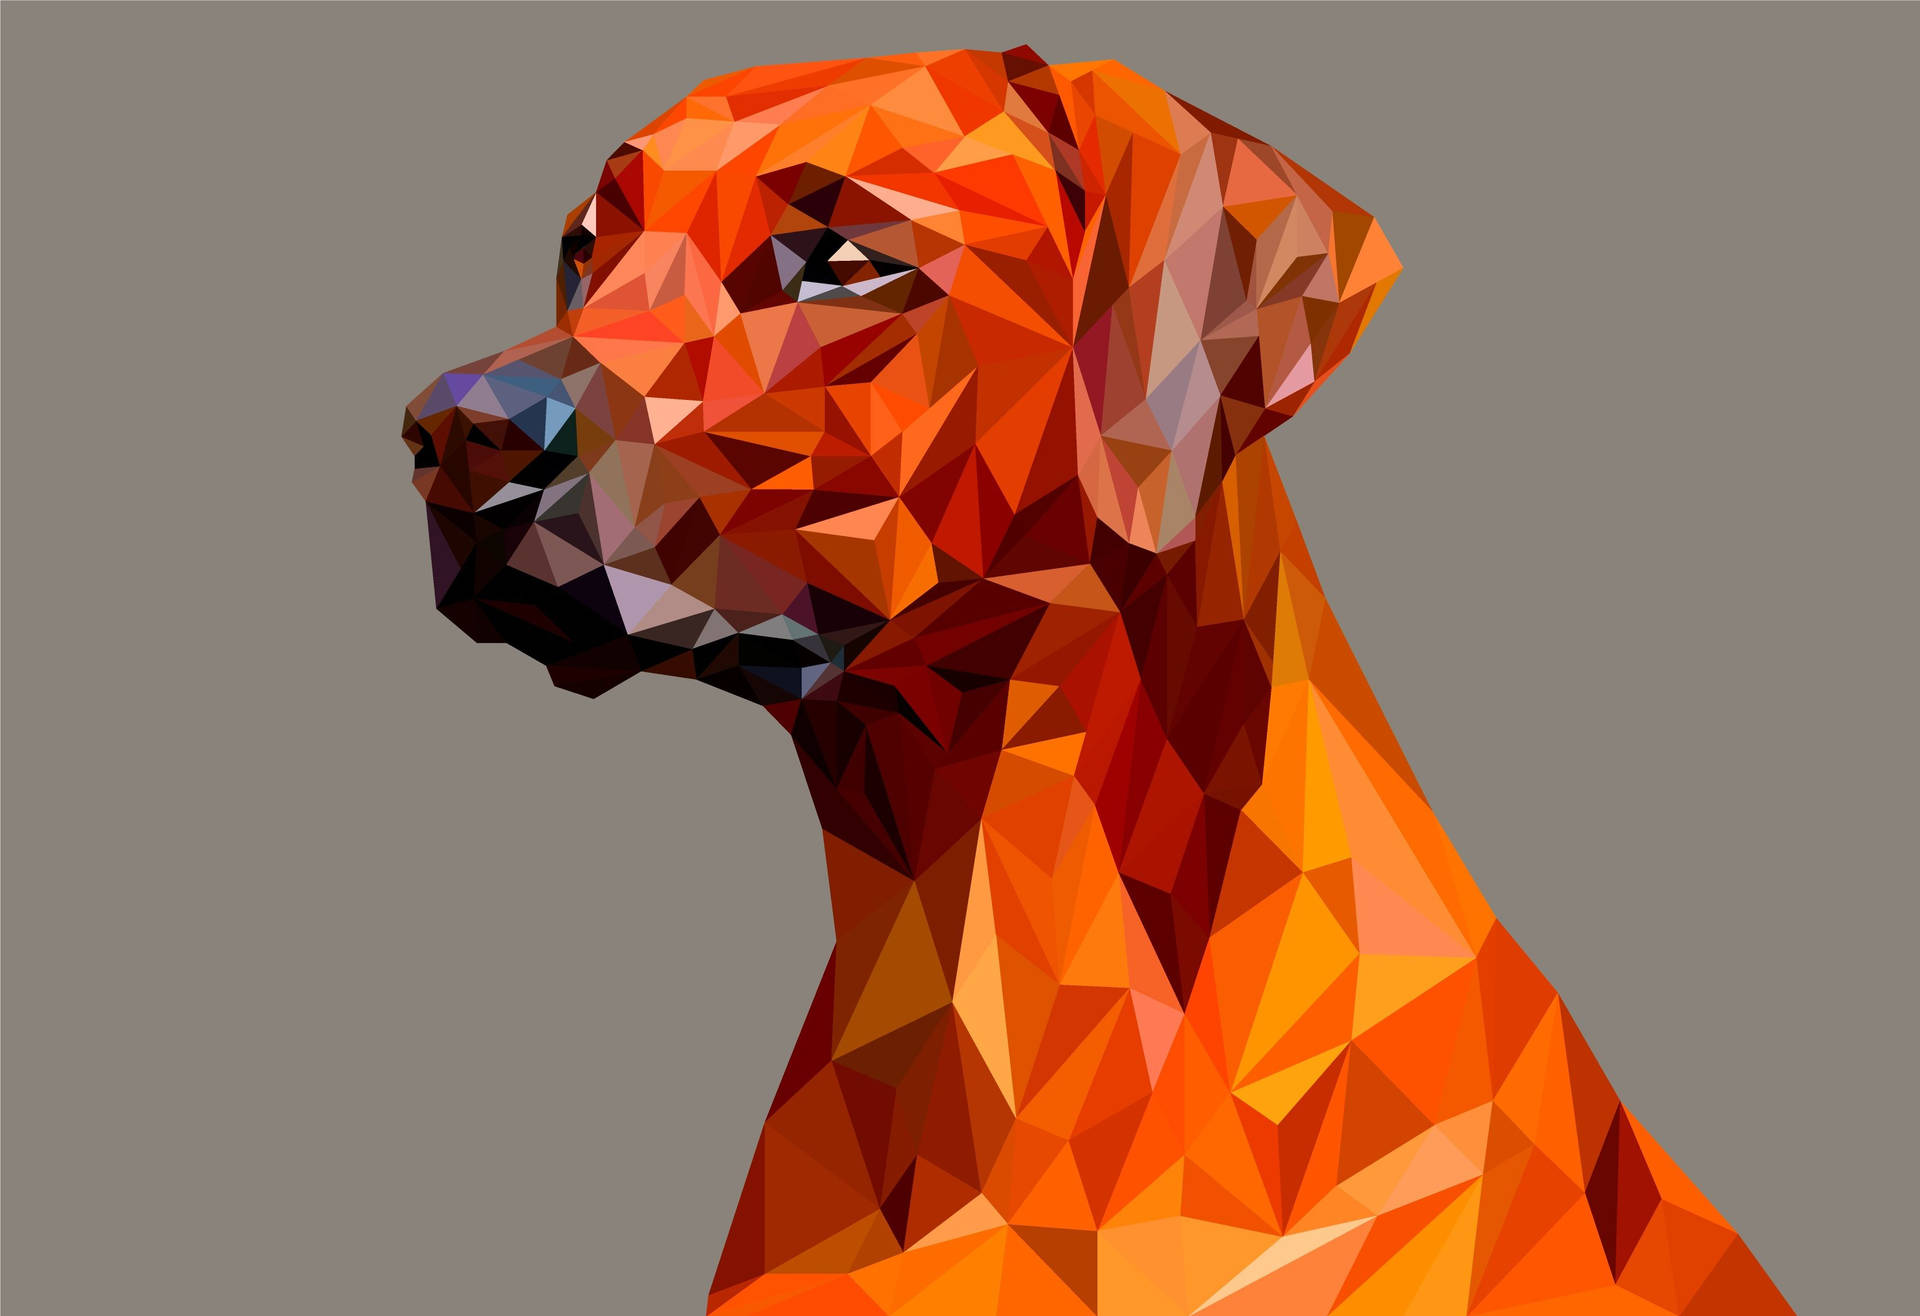 Polygonhundkonst. Wallpaper